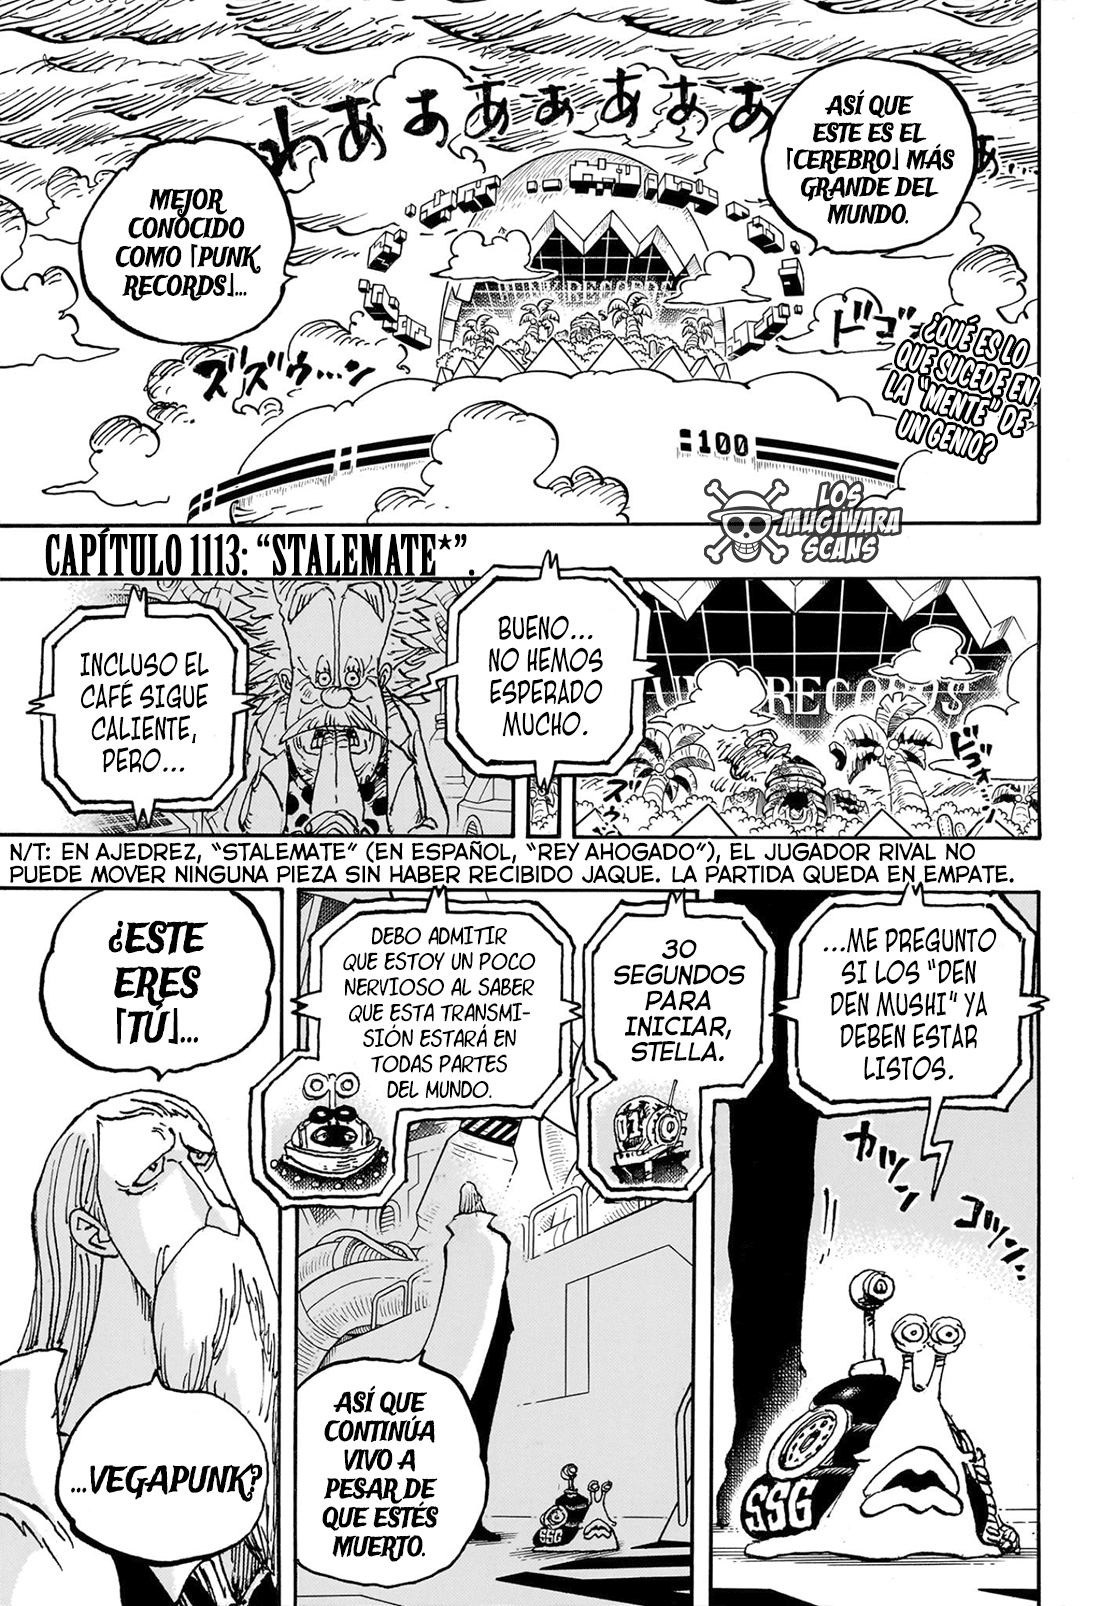 español - One Piece Manga 1113 [Español] 01